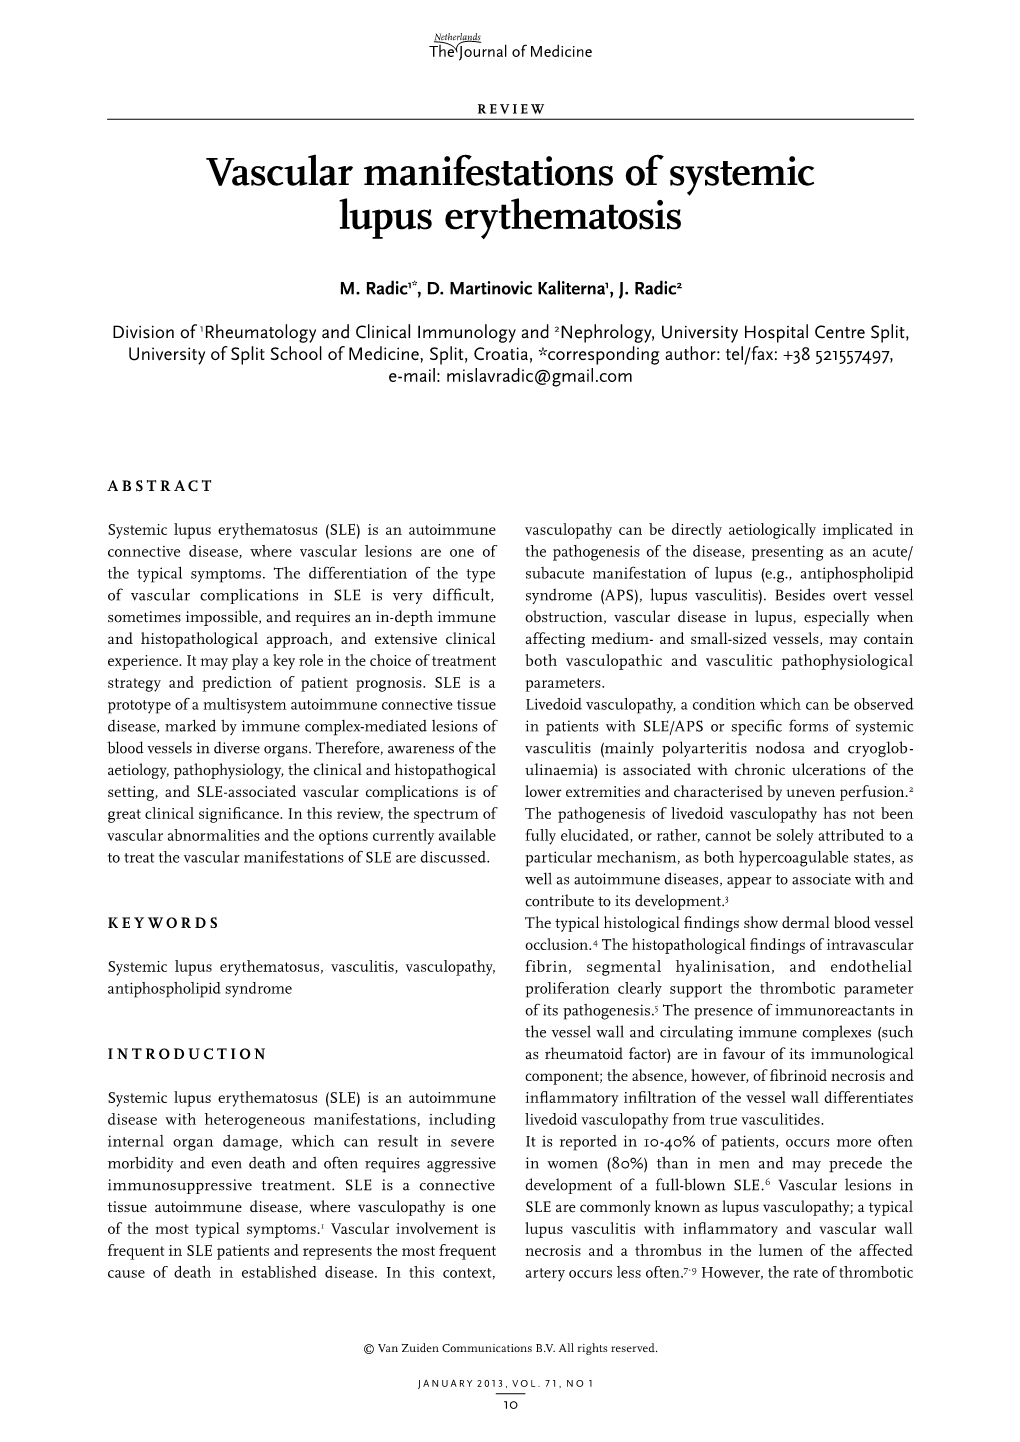 Vascular Manifestations of Systemic Lupus Erythematosis